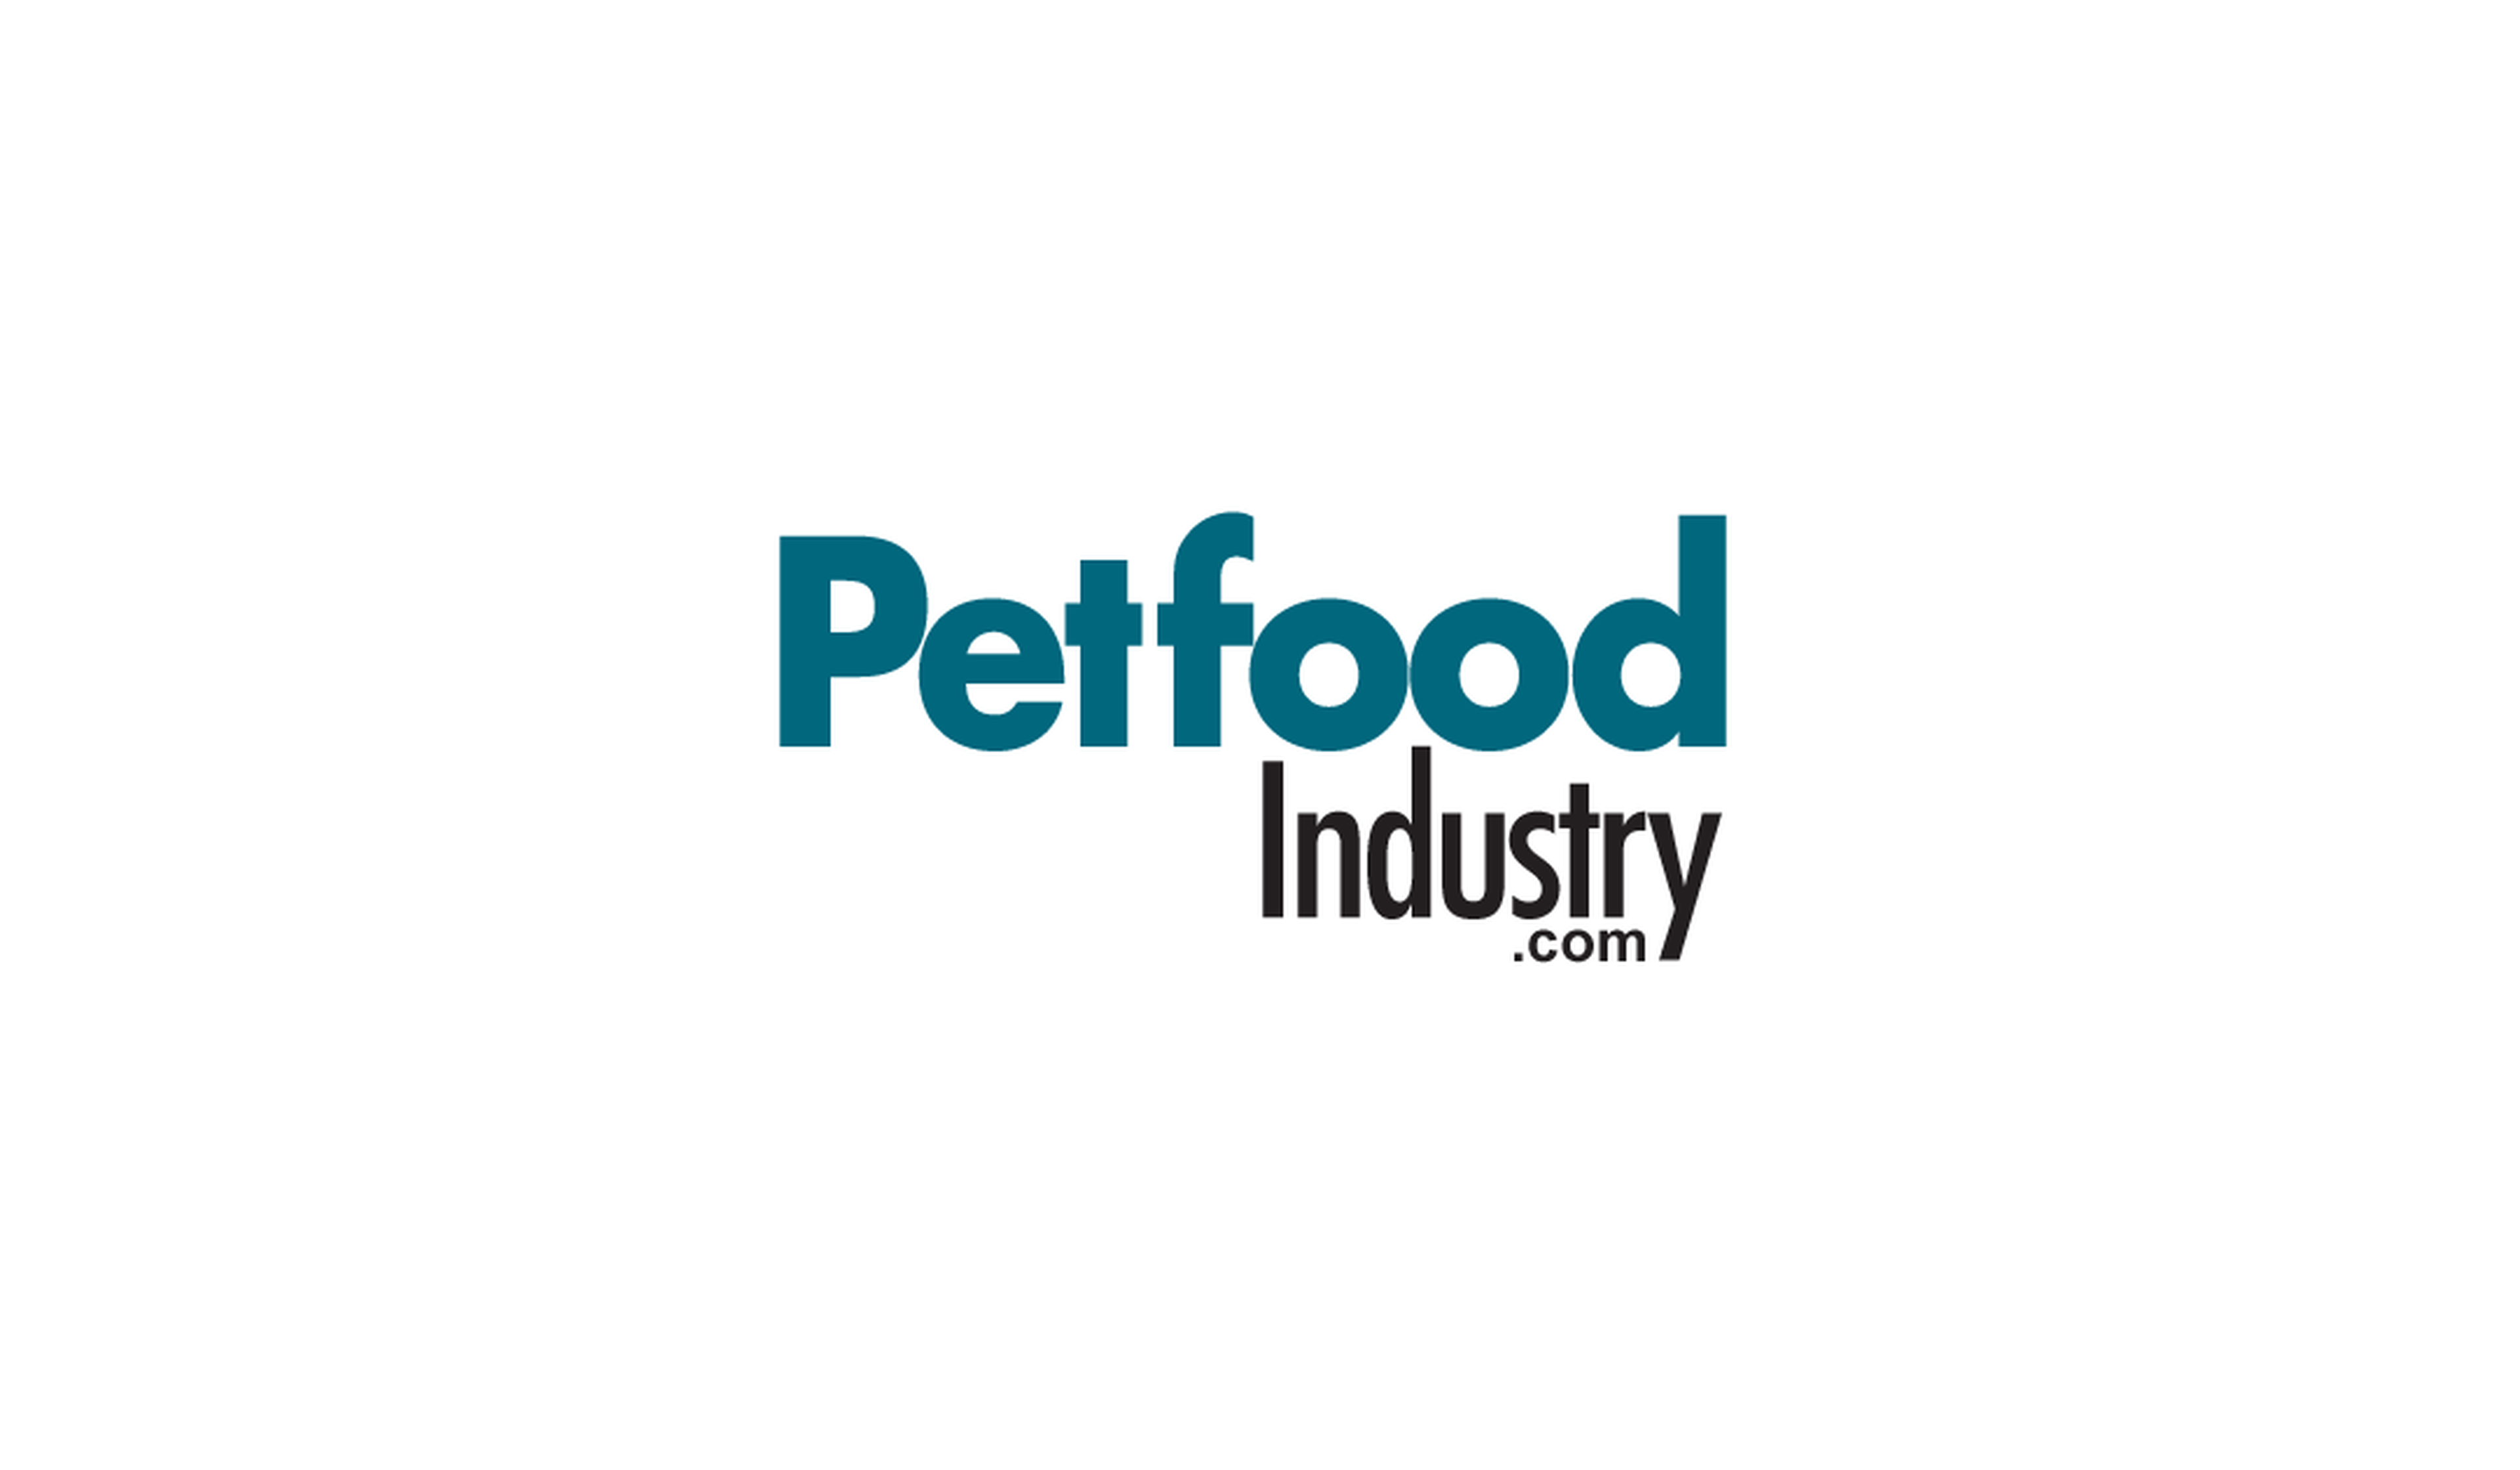 Petfood Industry.com Logo